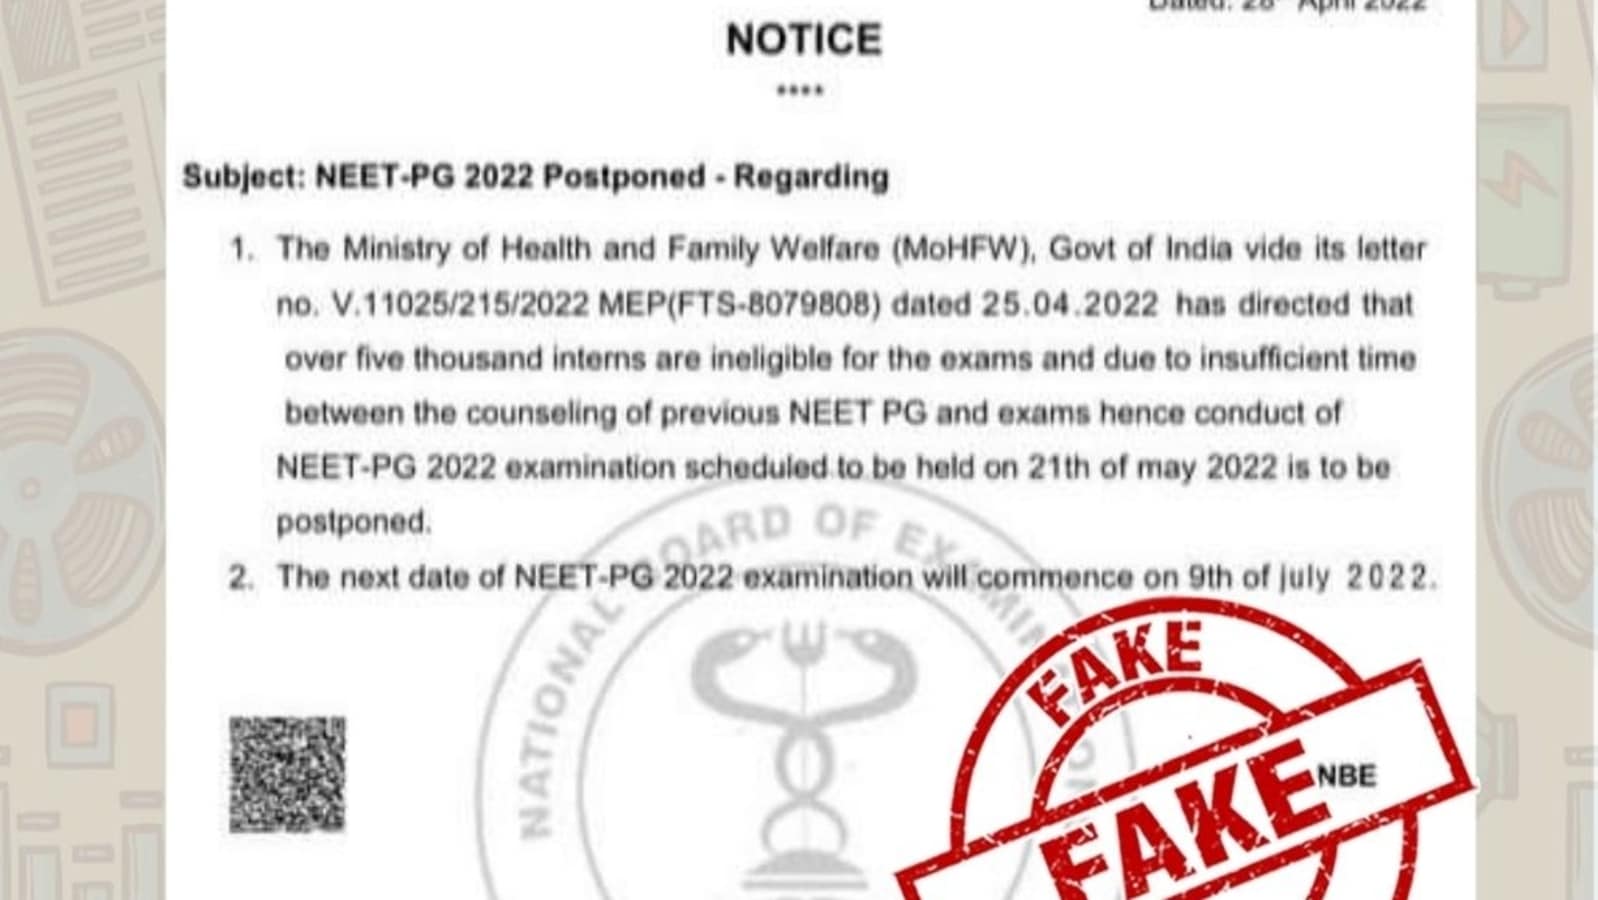 NEET PG 2022 not postponed, beware of fake notice in circulation: PIB fact check